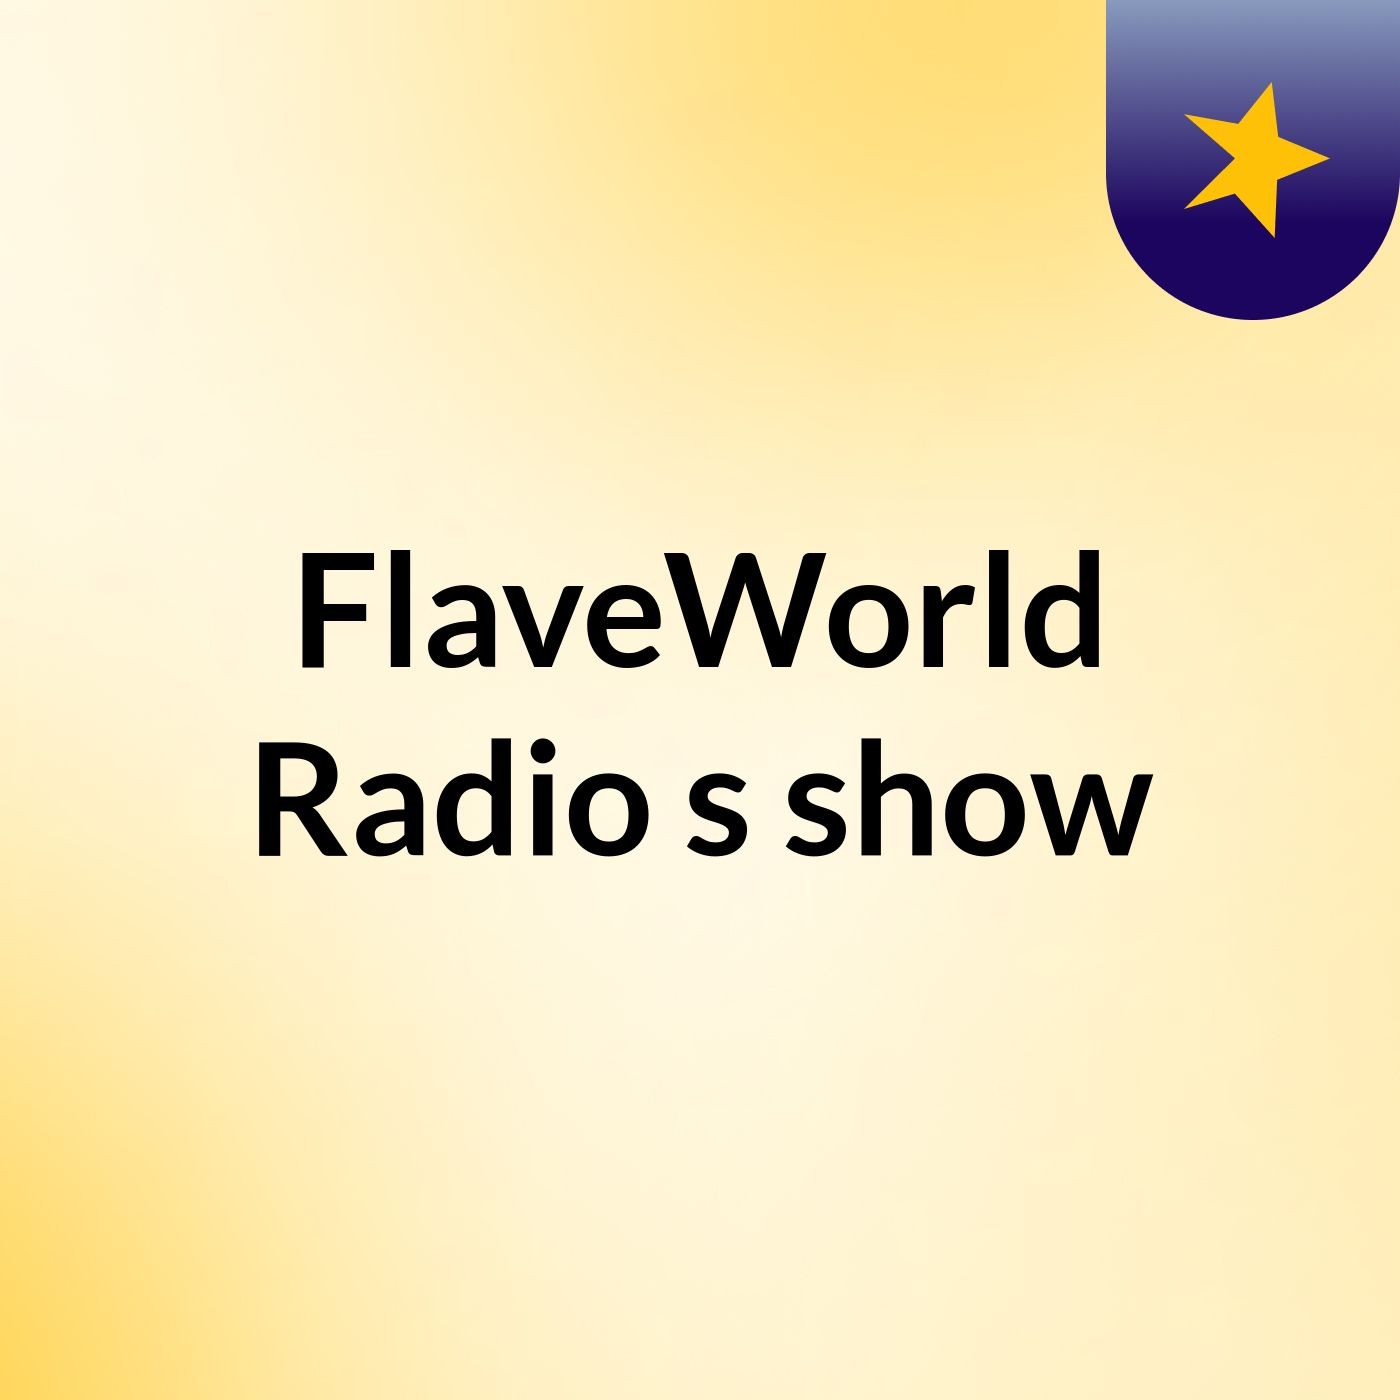 FlaveWorld Radio's show